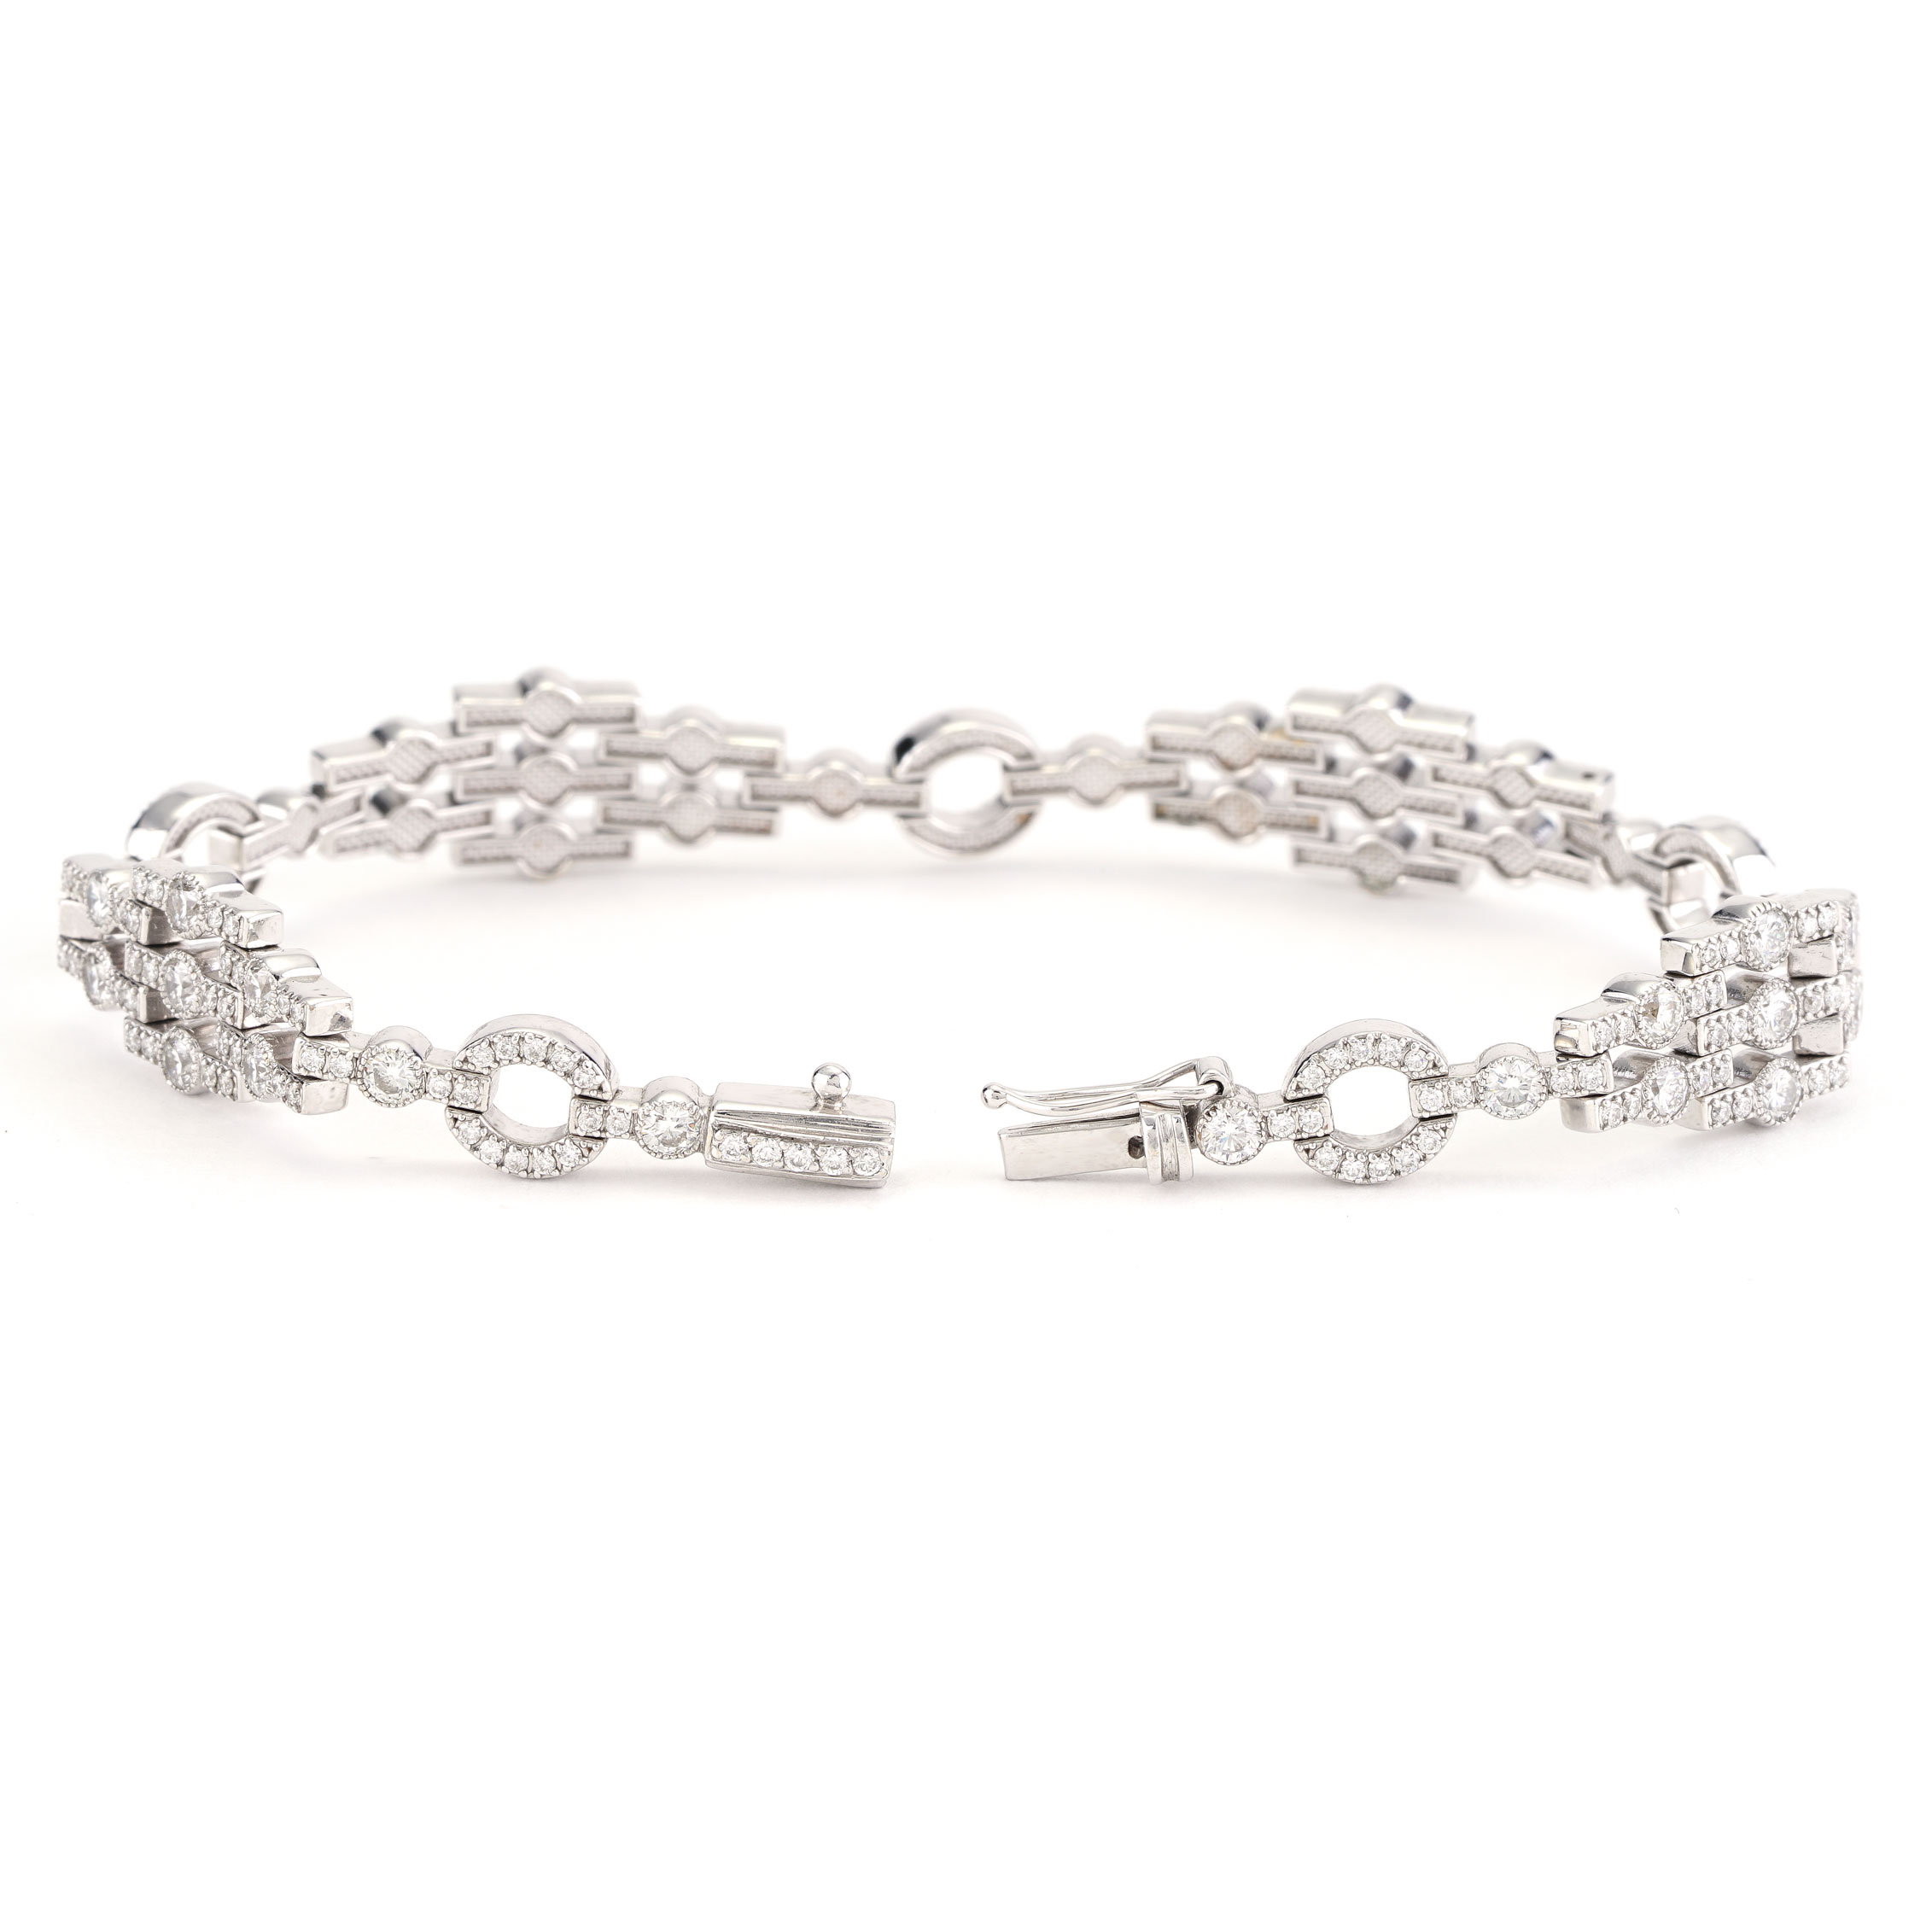 Vintage Style Bead Set Diamond Bracelet in White Gold | New York ...